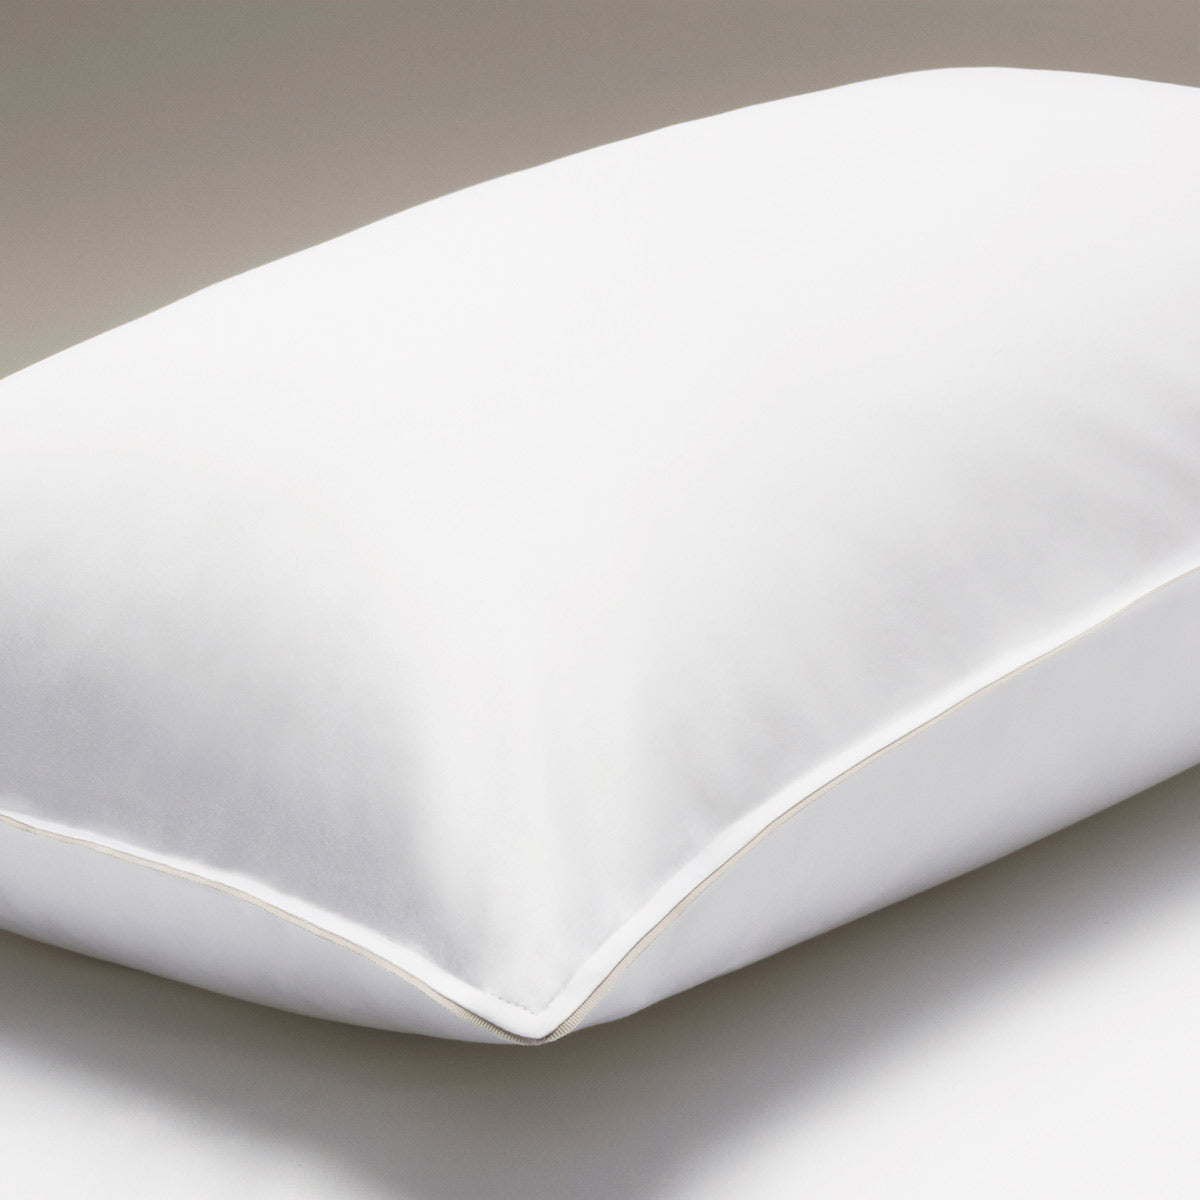 'Classic' Housewife Pillowcase – White with Grosgrain Trim - Josephine Home